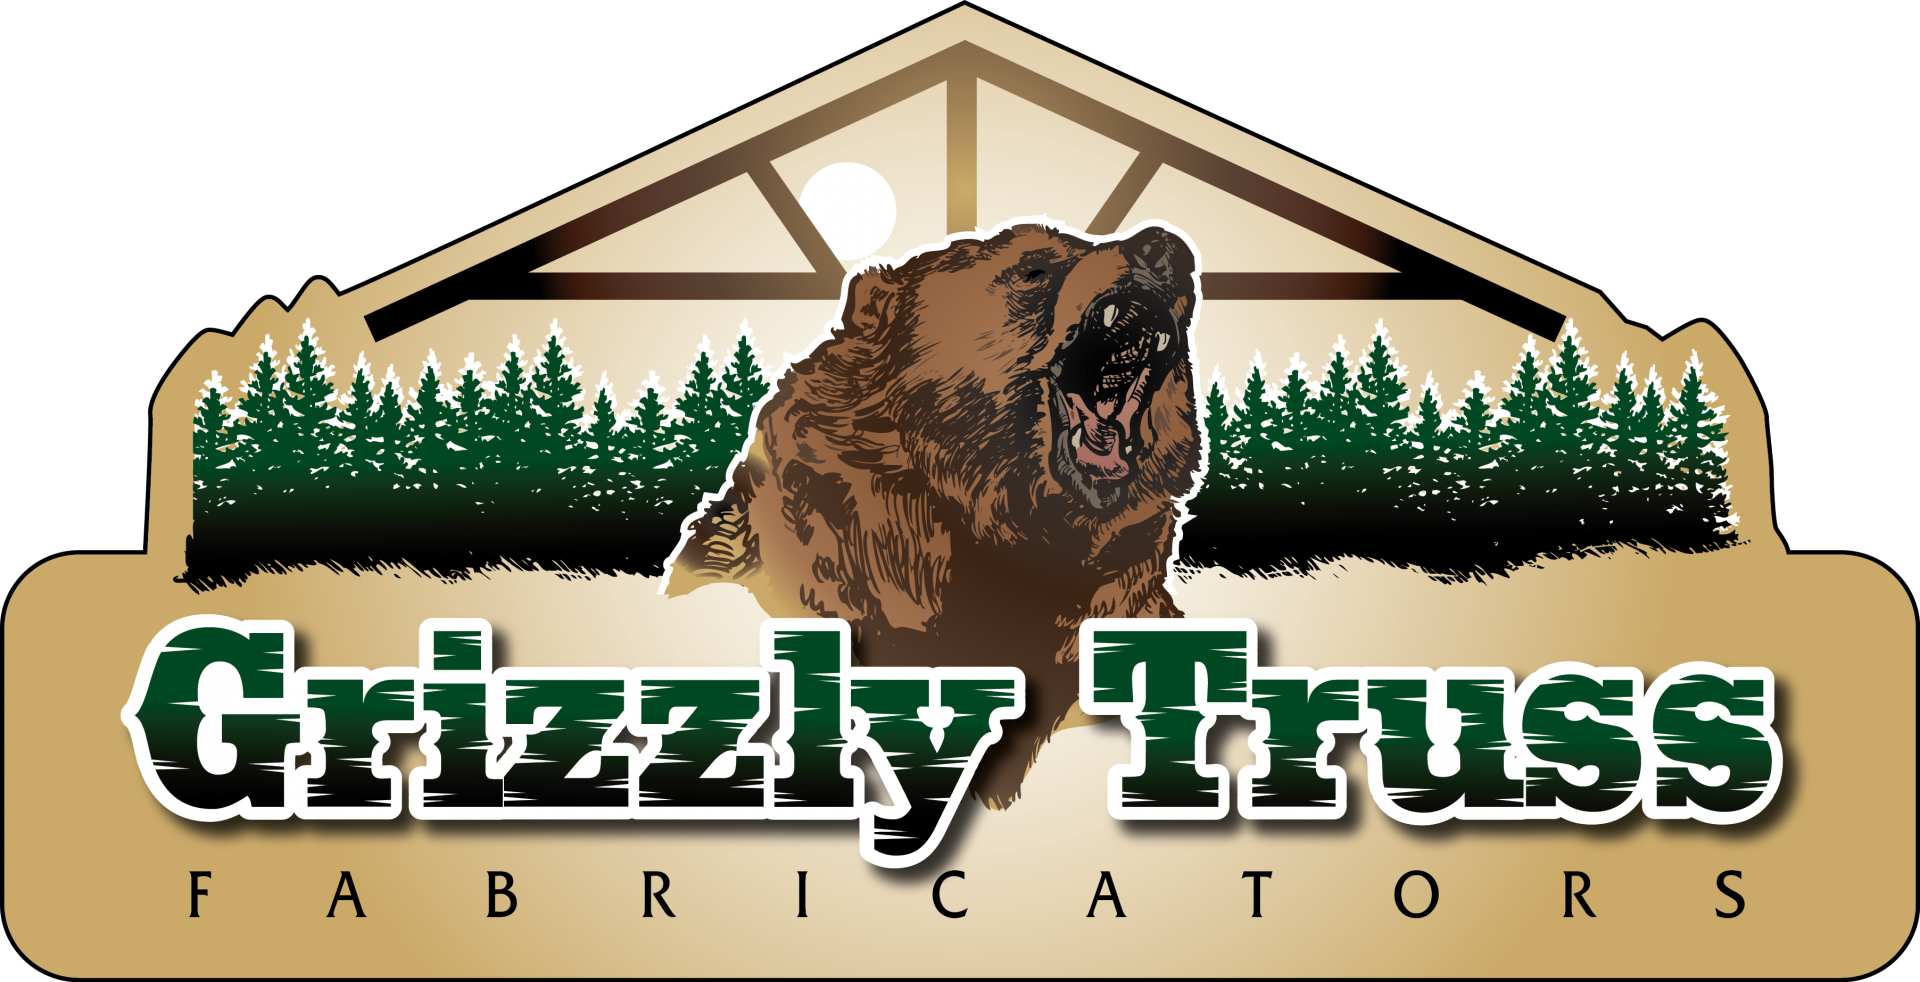 grizzlytruss-logo